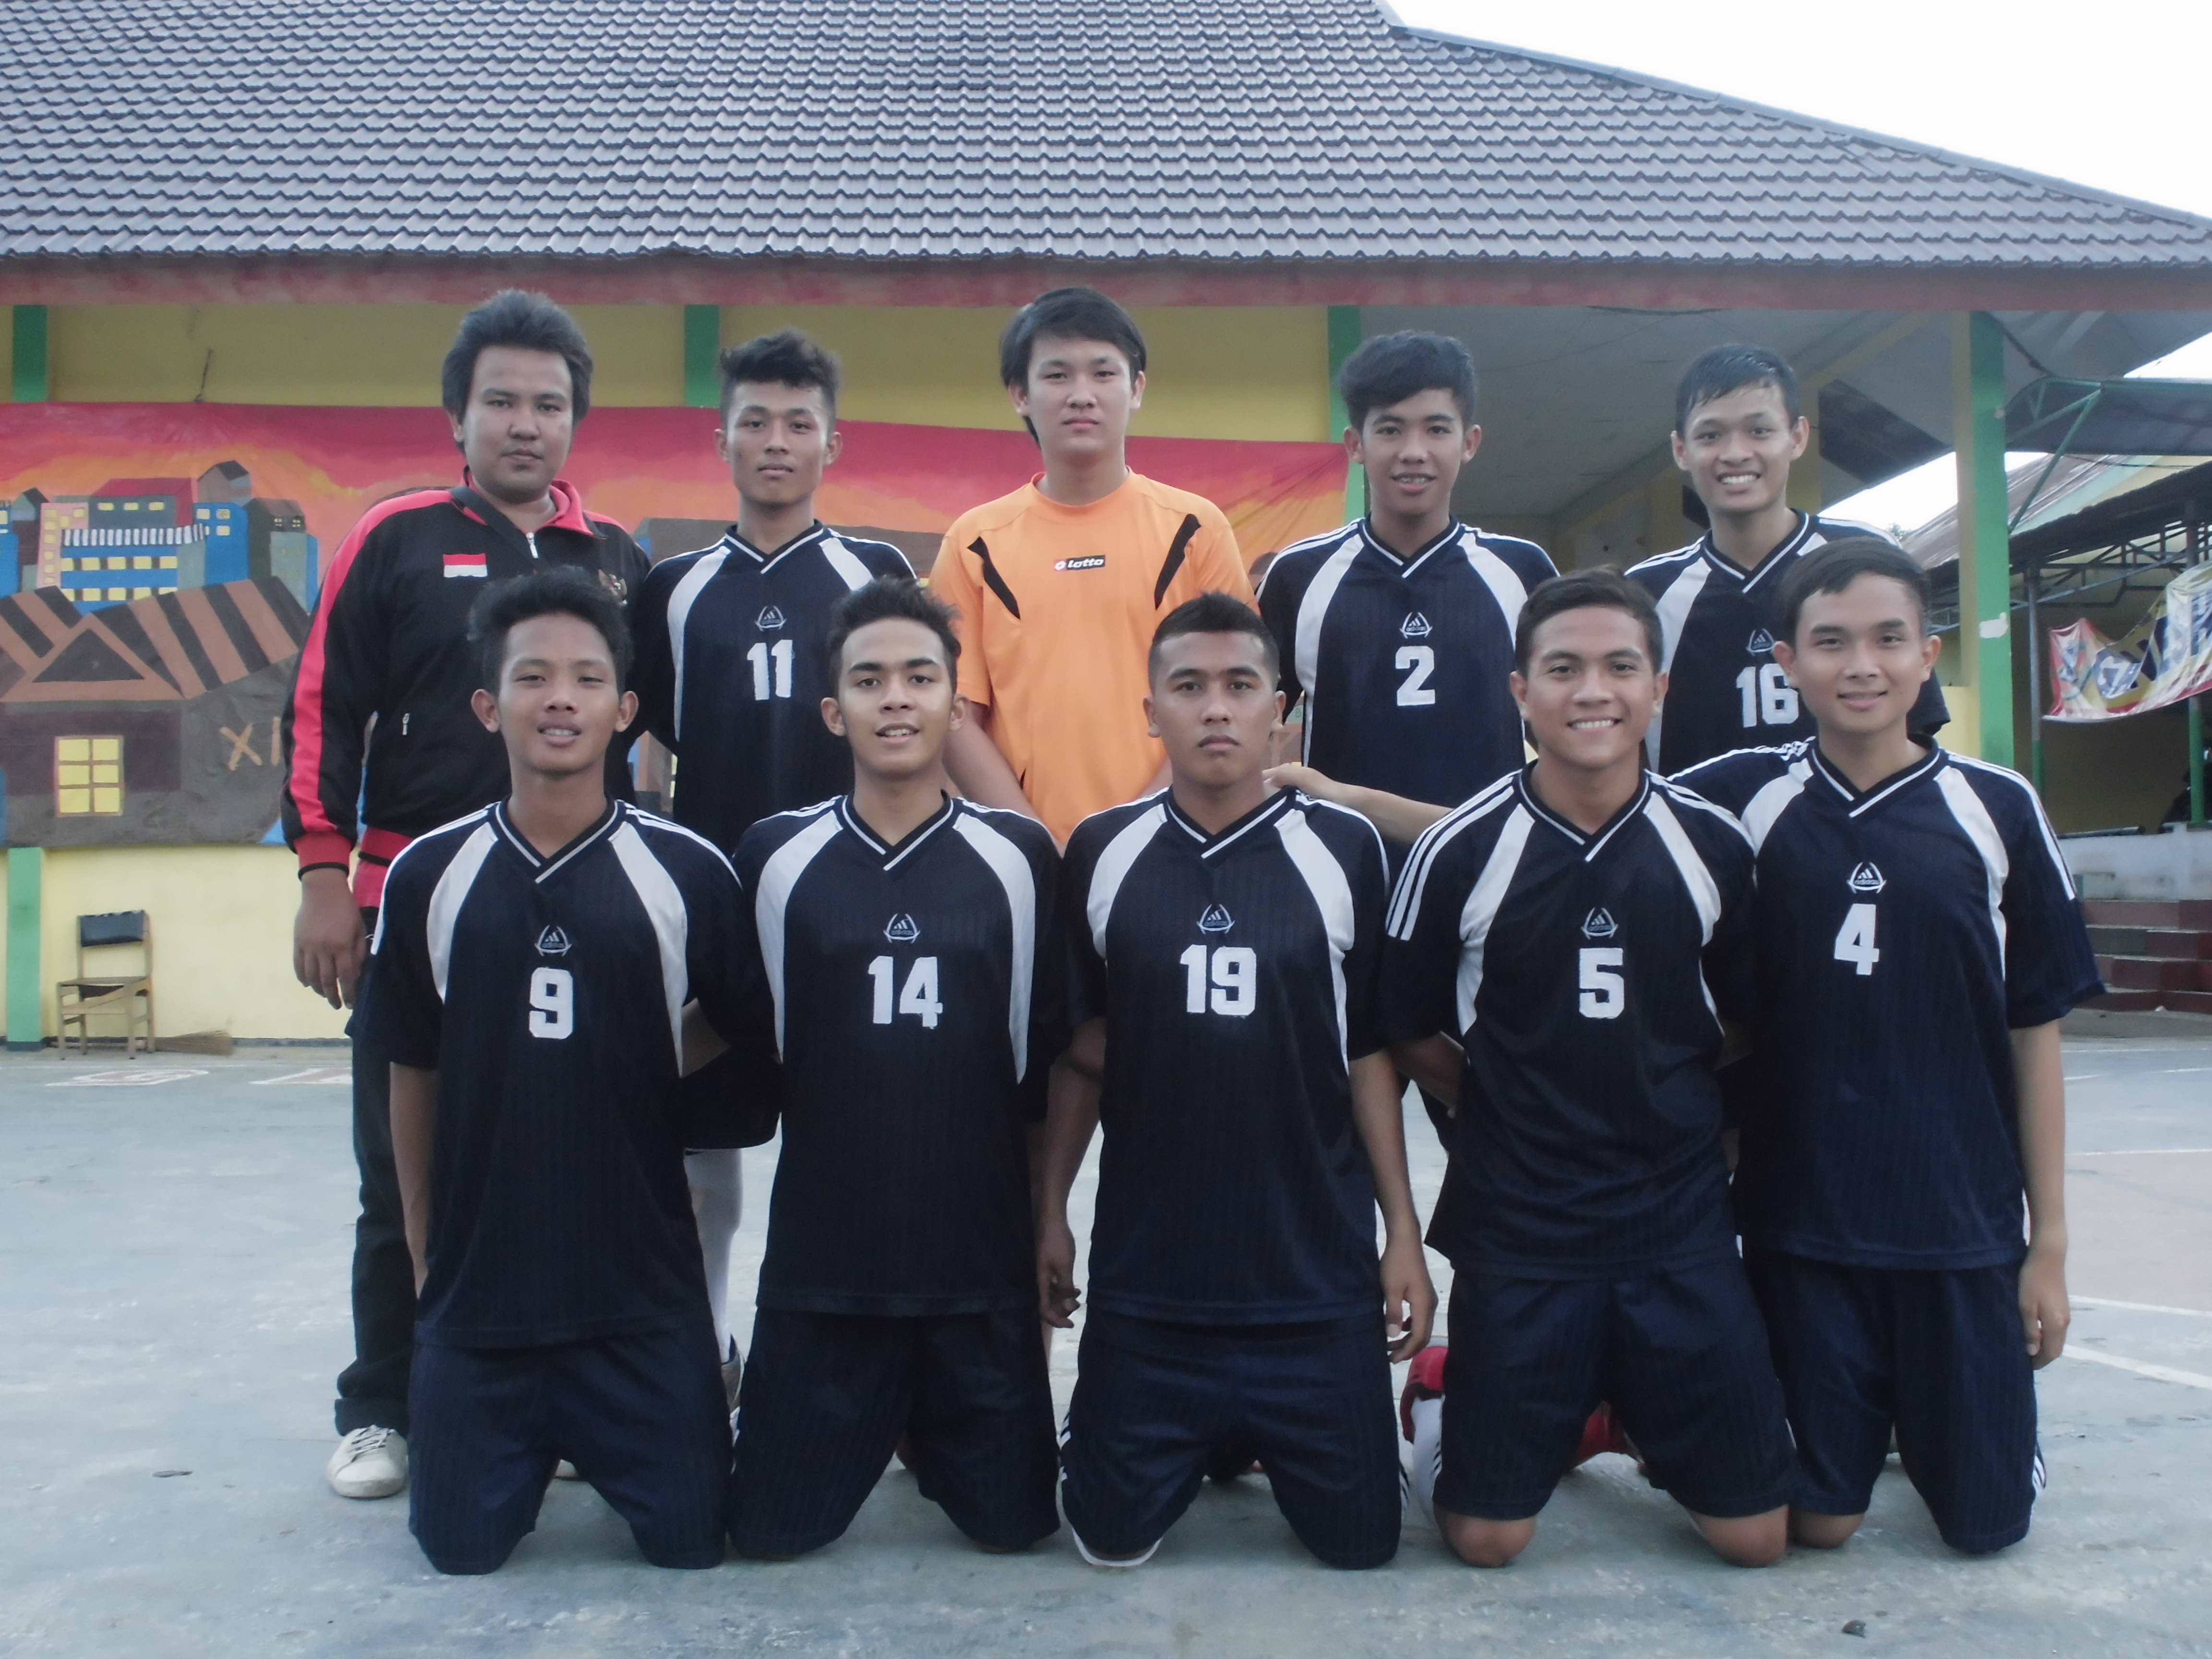 Hattrick Rahmat W, Bawa SMAN 4 Juarai Cendana Futsal 2013